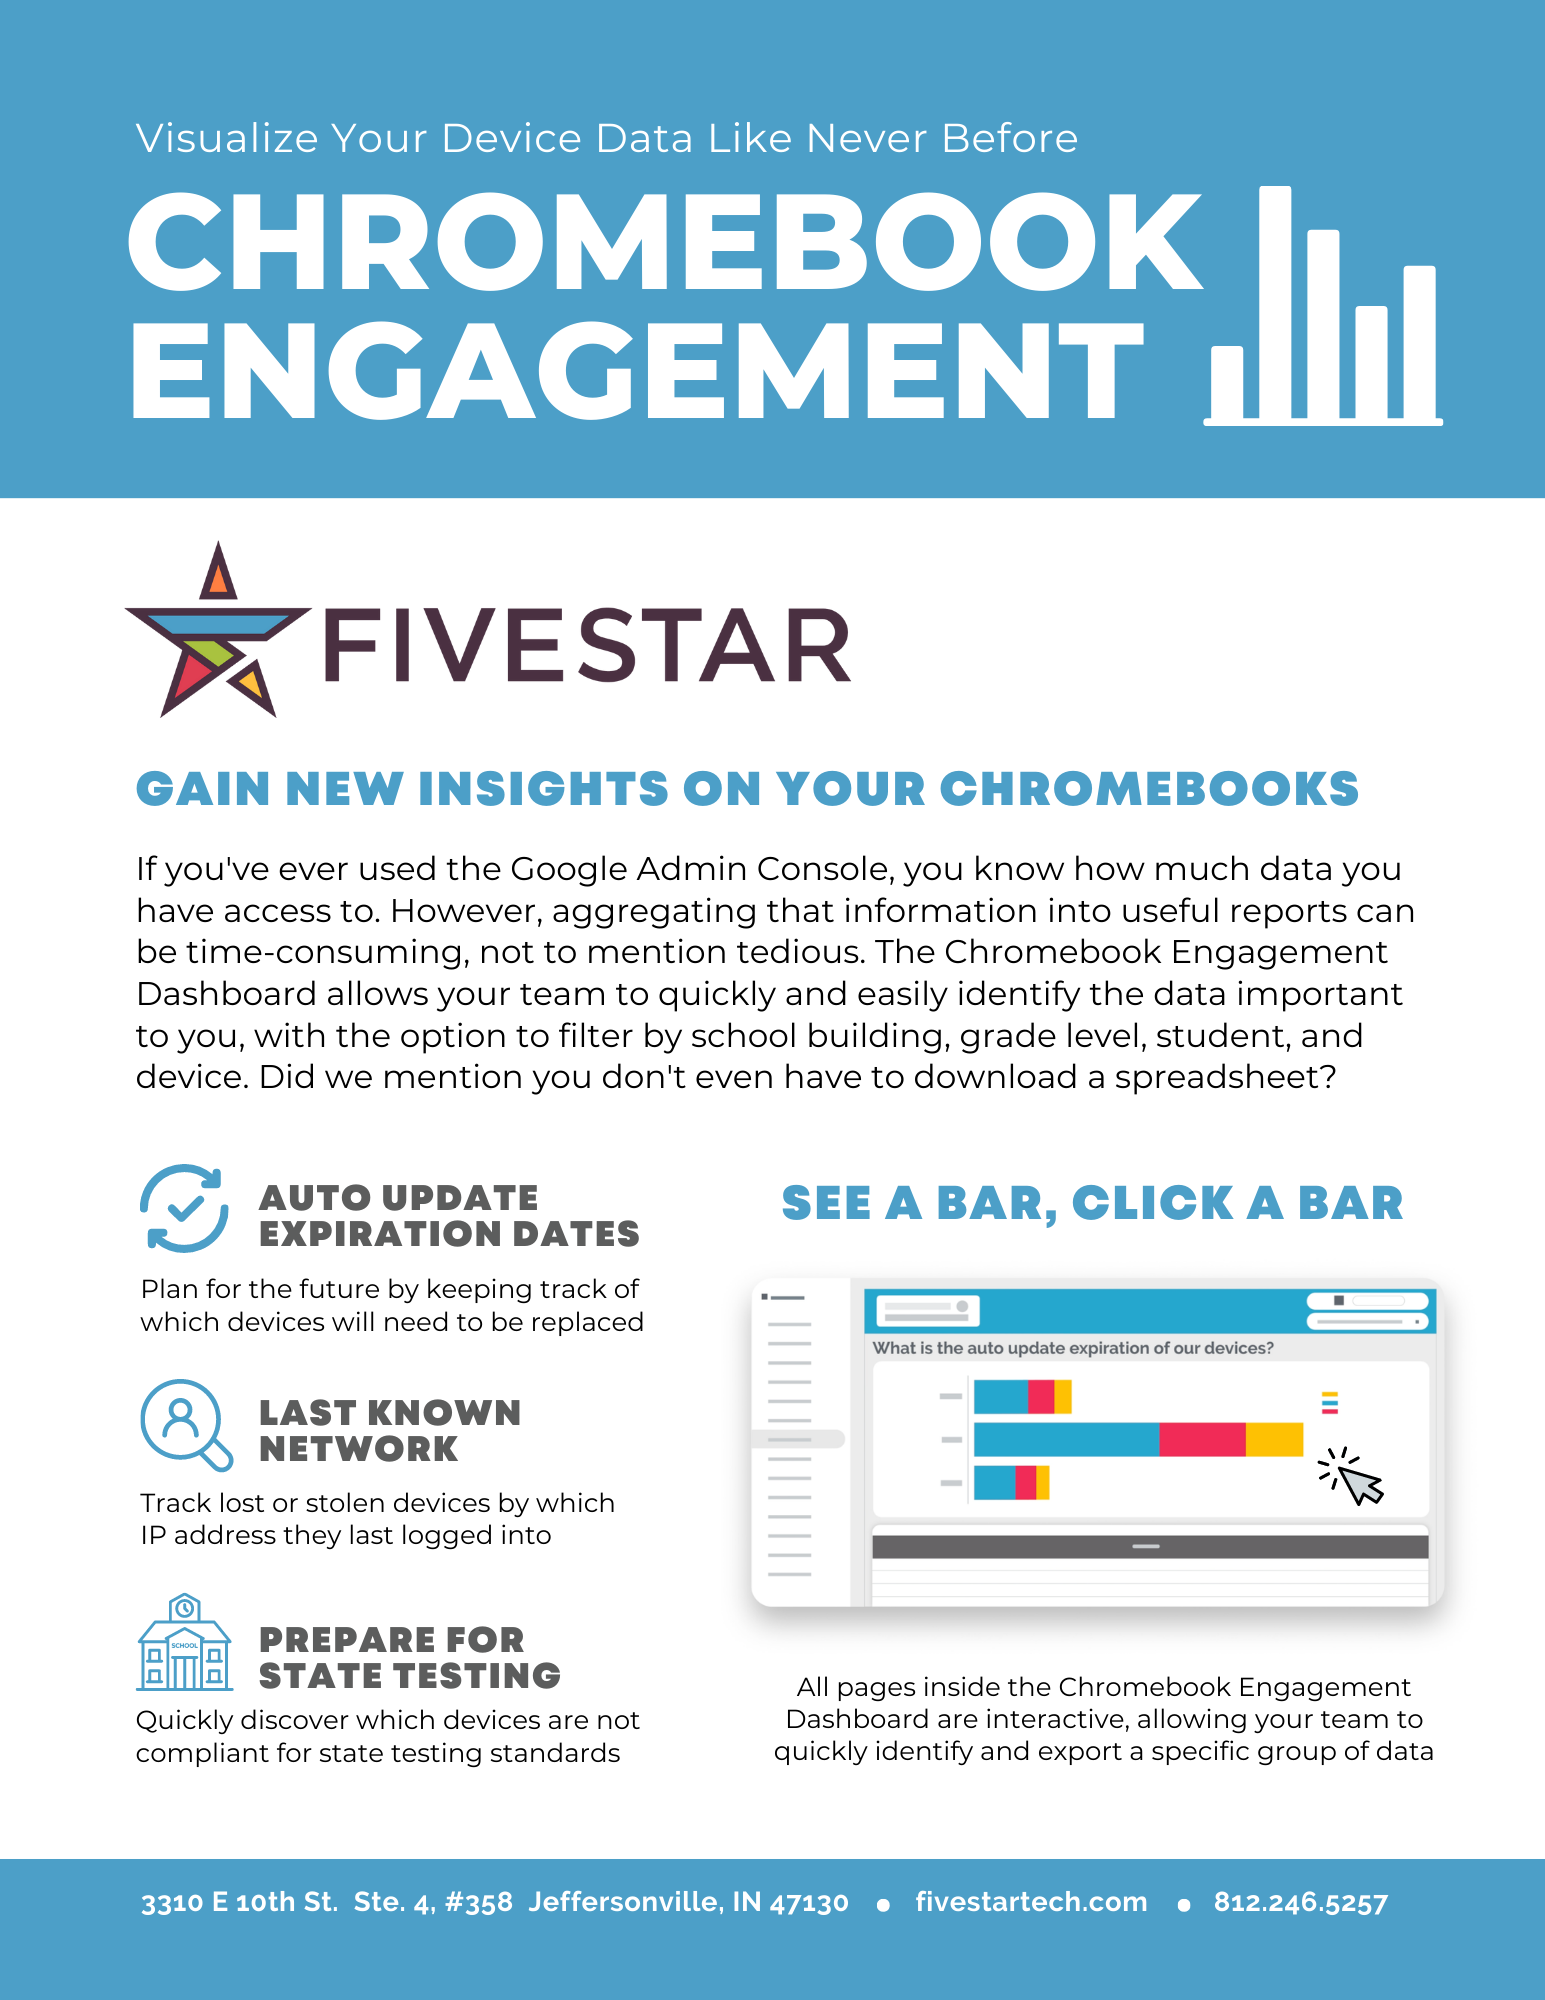 Chromebook Engagement Dashboard